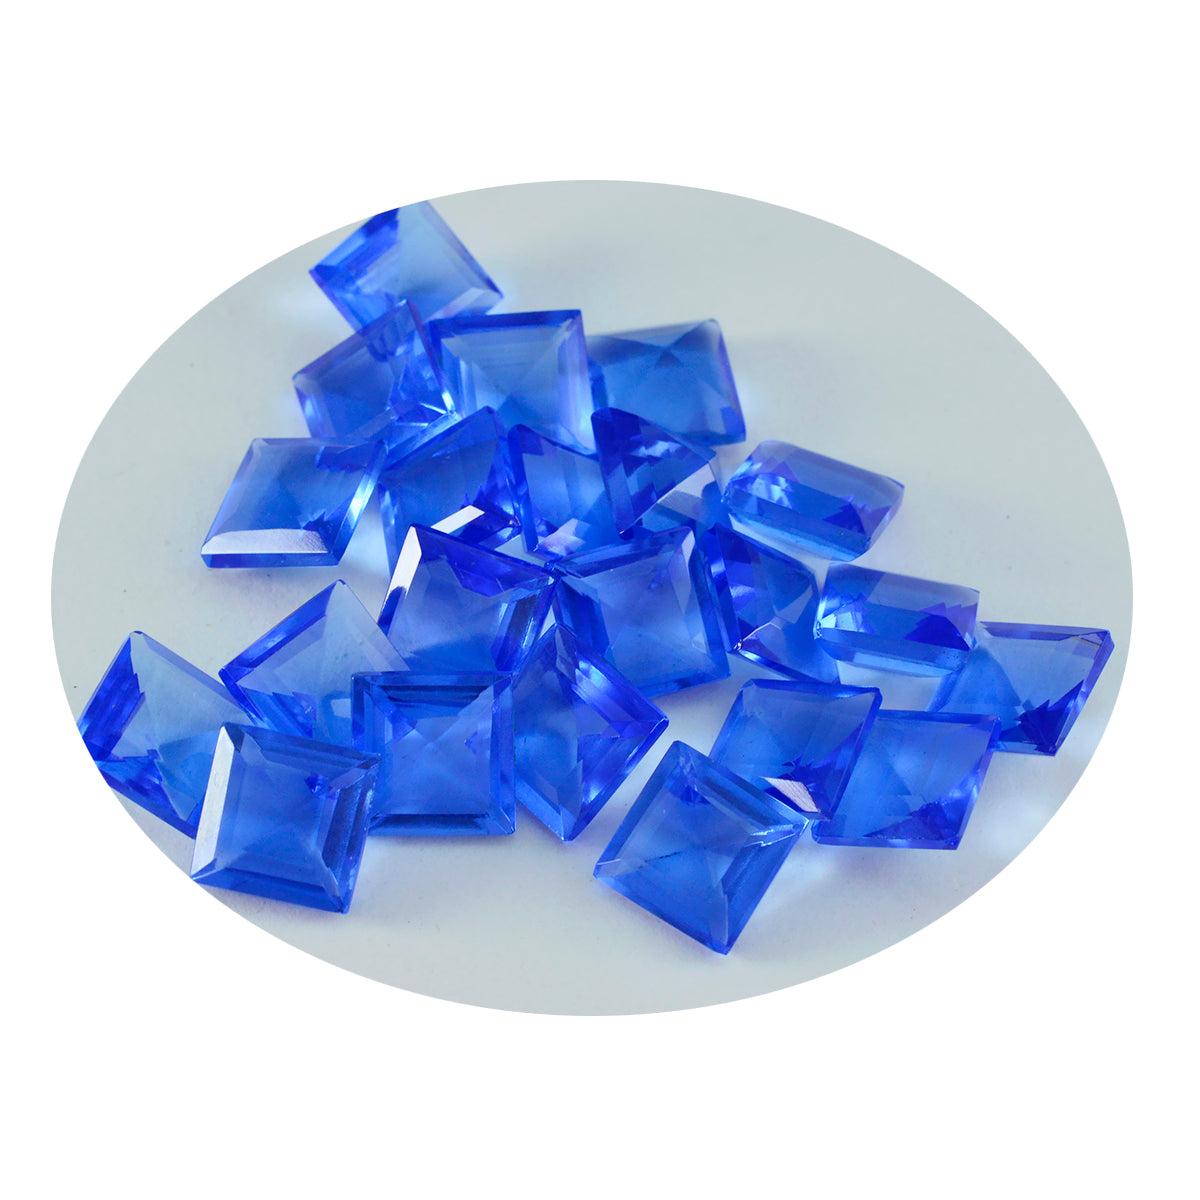 Riyogems 1 Stück blauer Saphir, CZ, facettiert, 9 x 9 mm, quadratische Form, hübscher Qualitäts-Edelstein